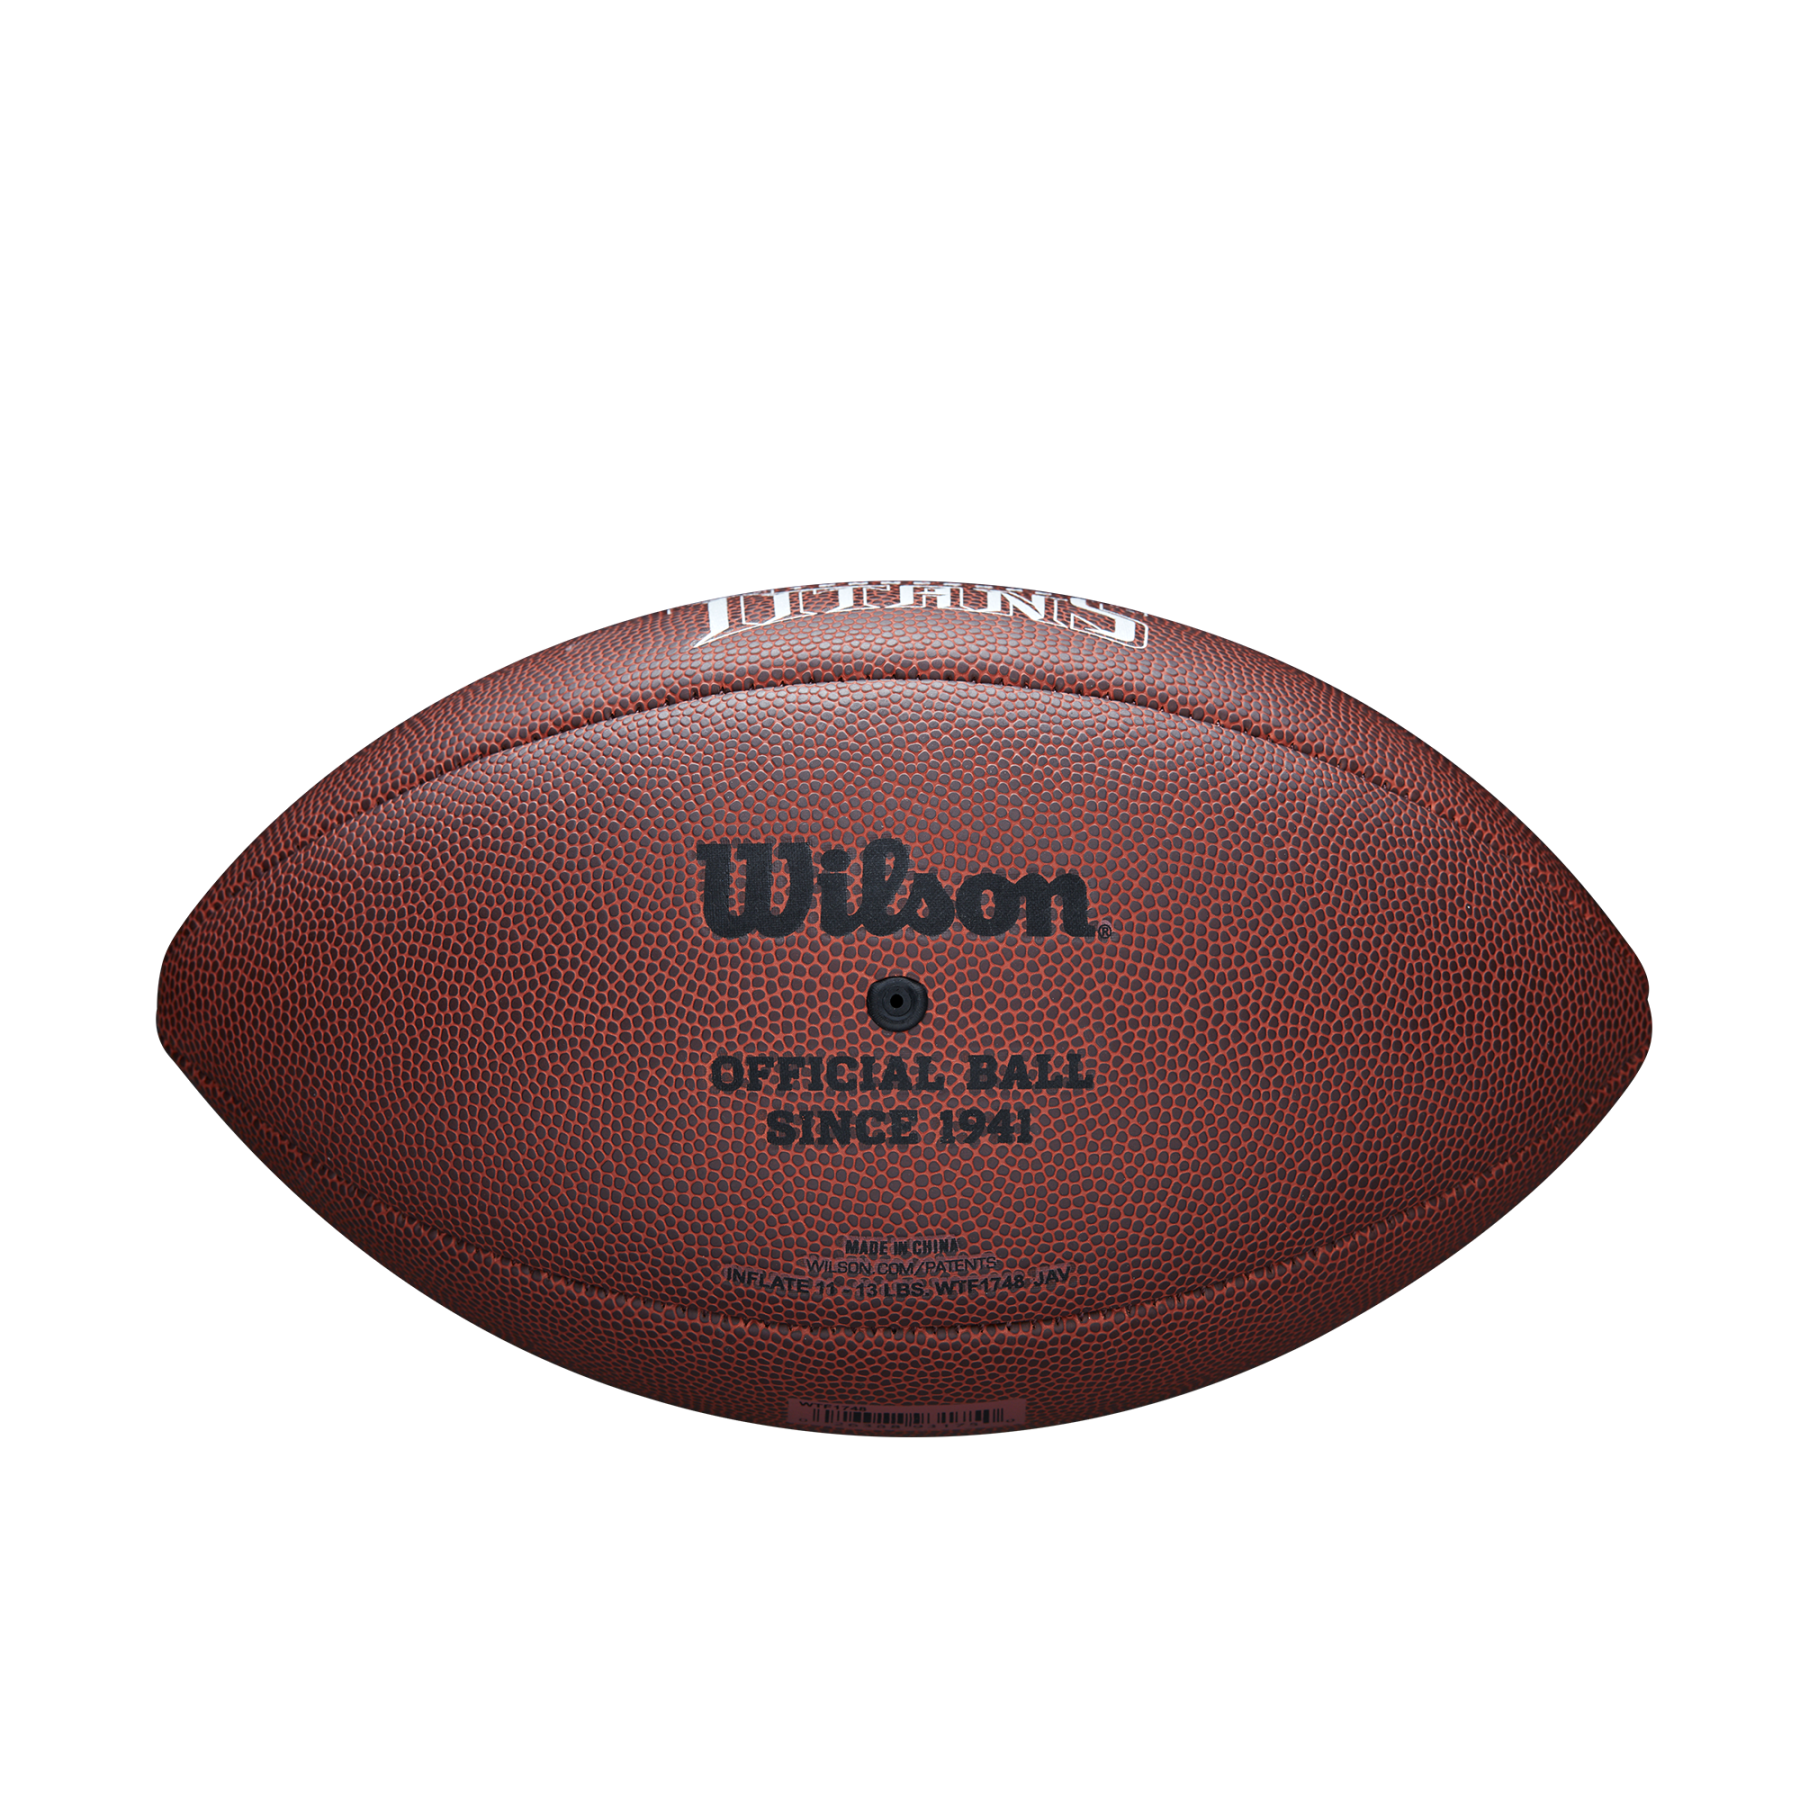 Palloncino Wilson Titans NFL Licensed